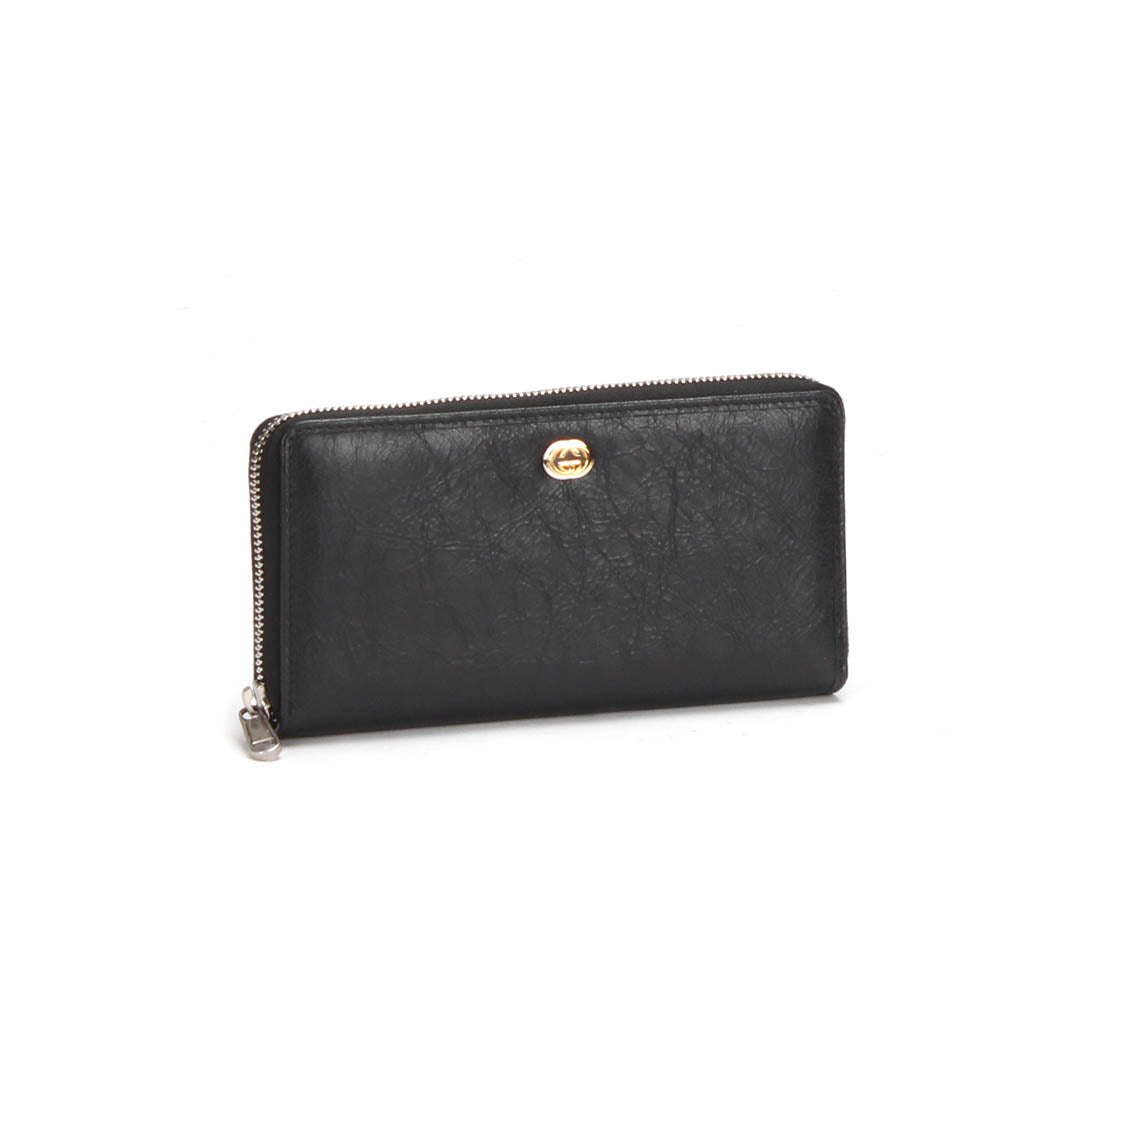 Interlocking G Leather Long Wallet 575988